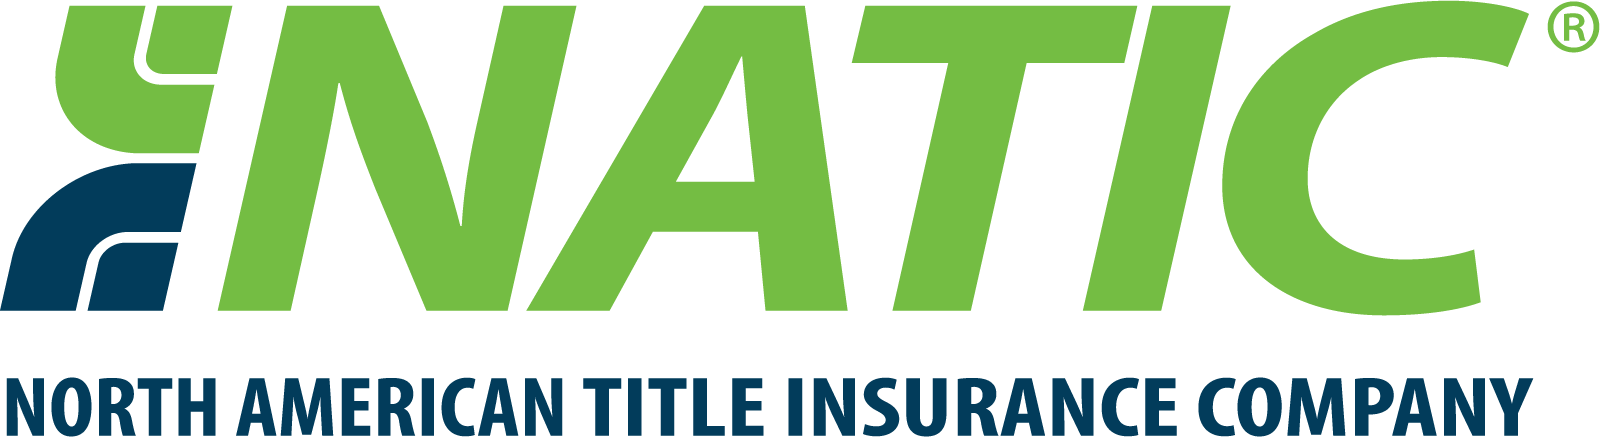 North American Title Insurance Company Logo